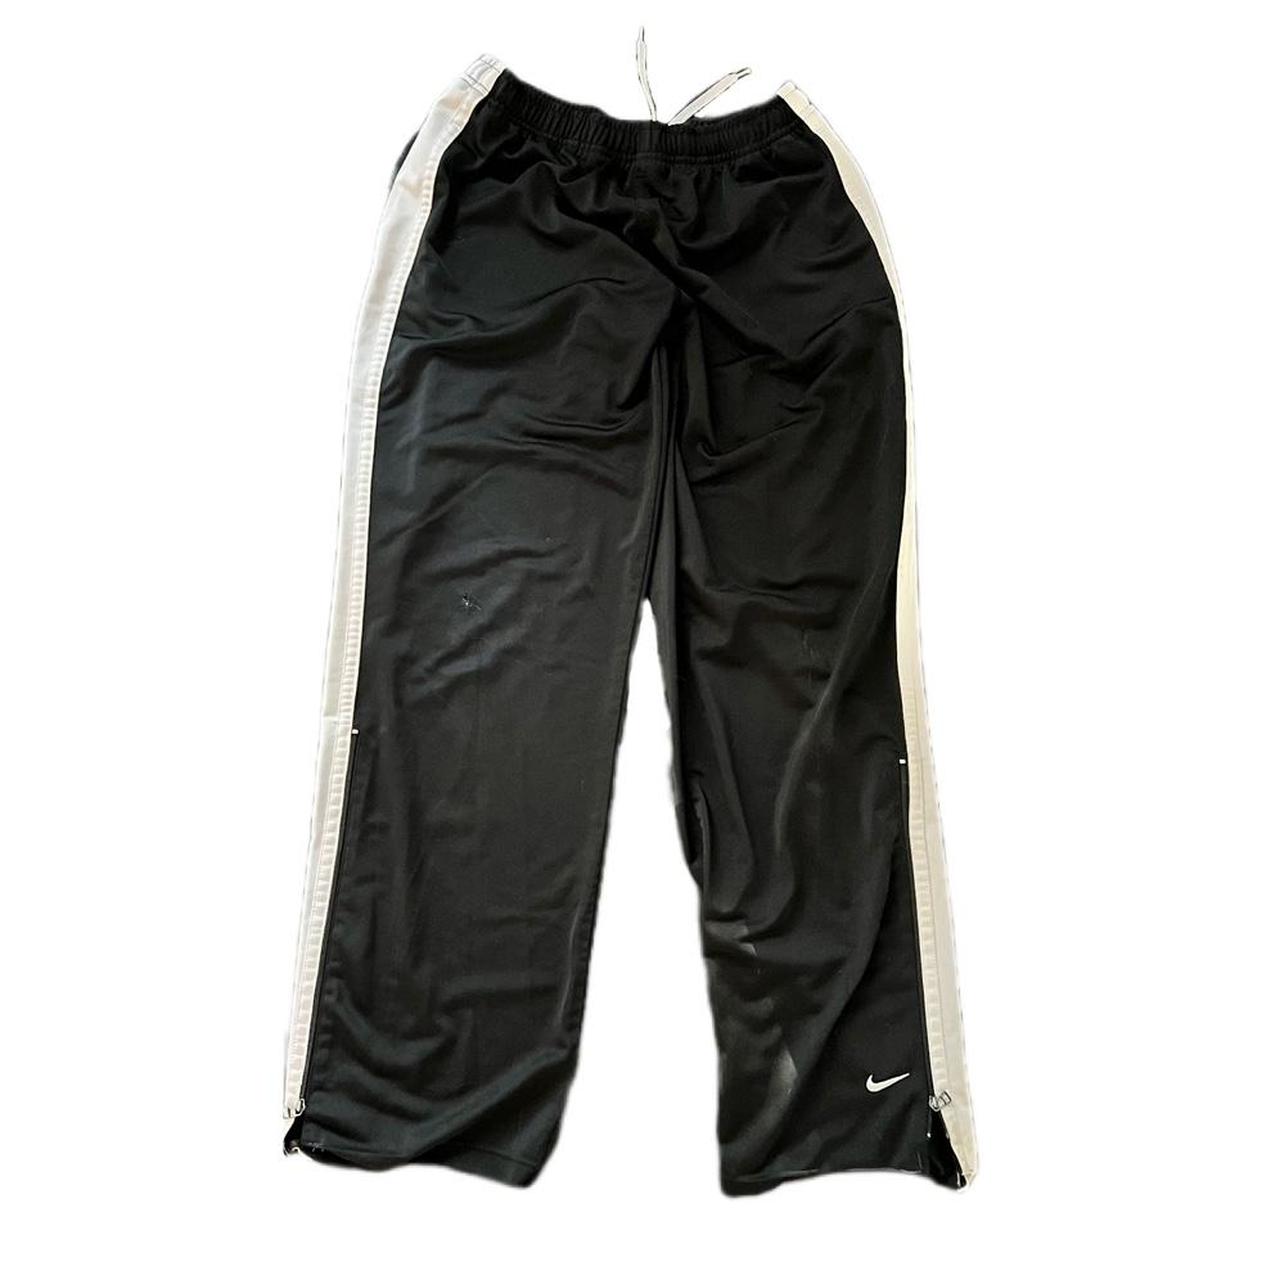 NIKE Boys Youth Medium Track Pants Sweatpants Gray w/Orange Stripe 3-33 |  eBay